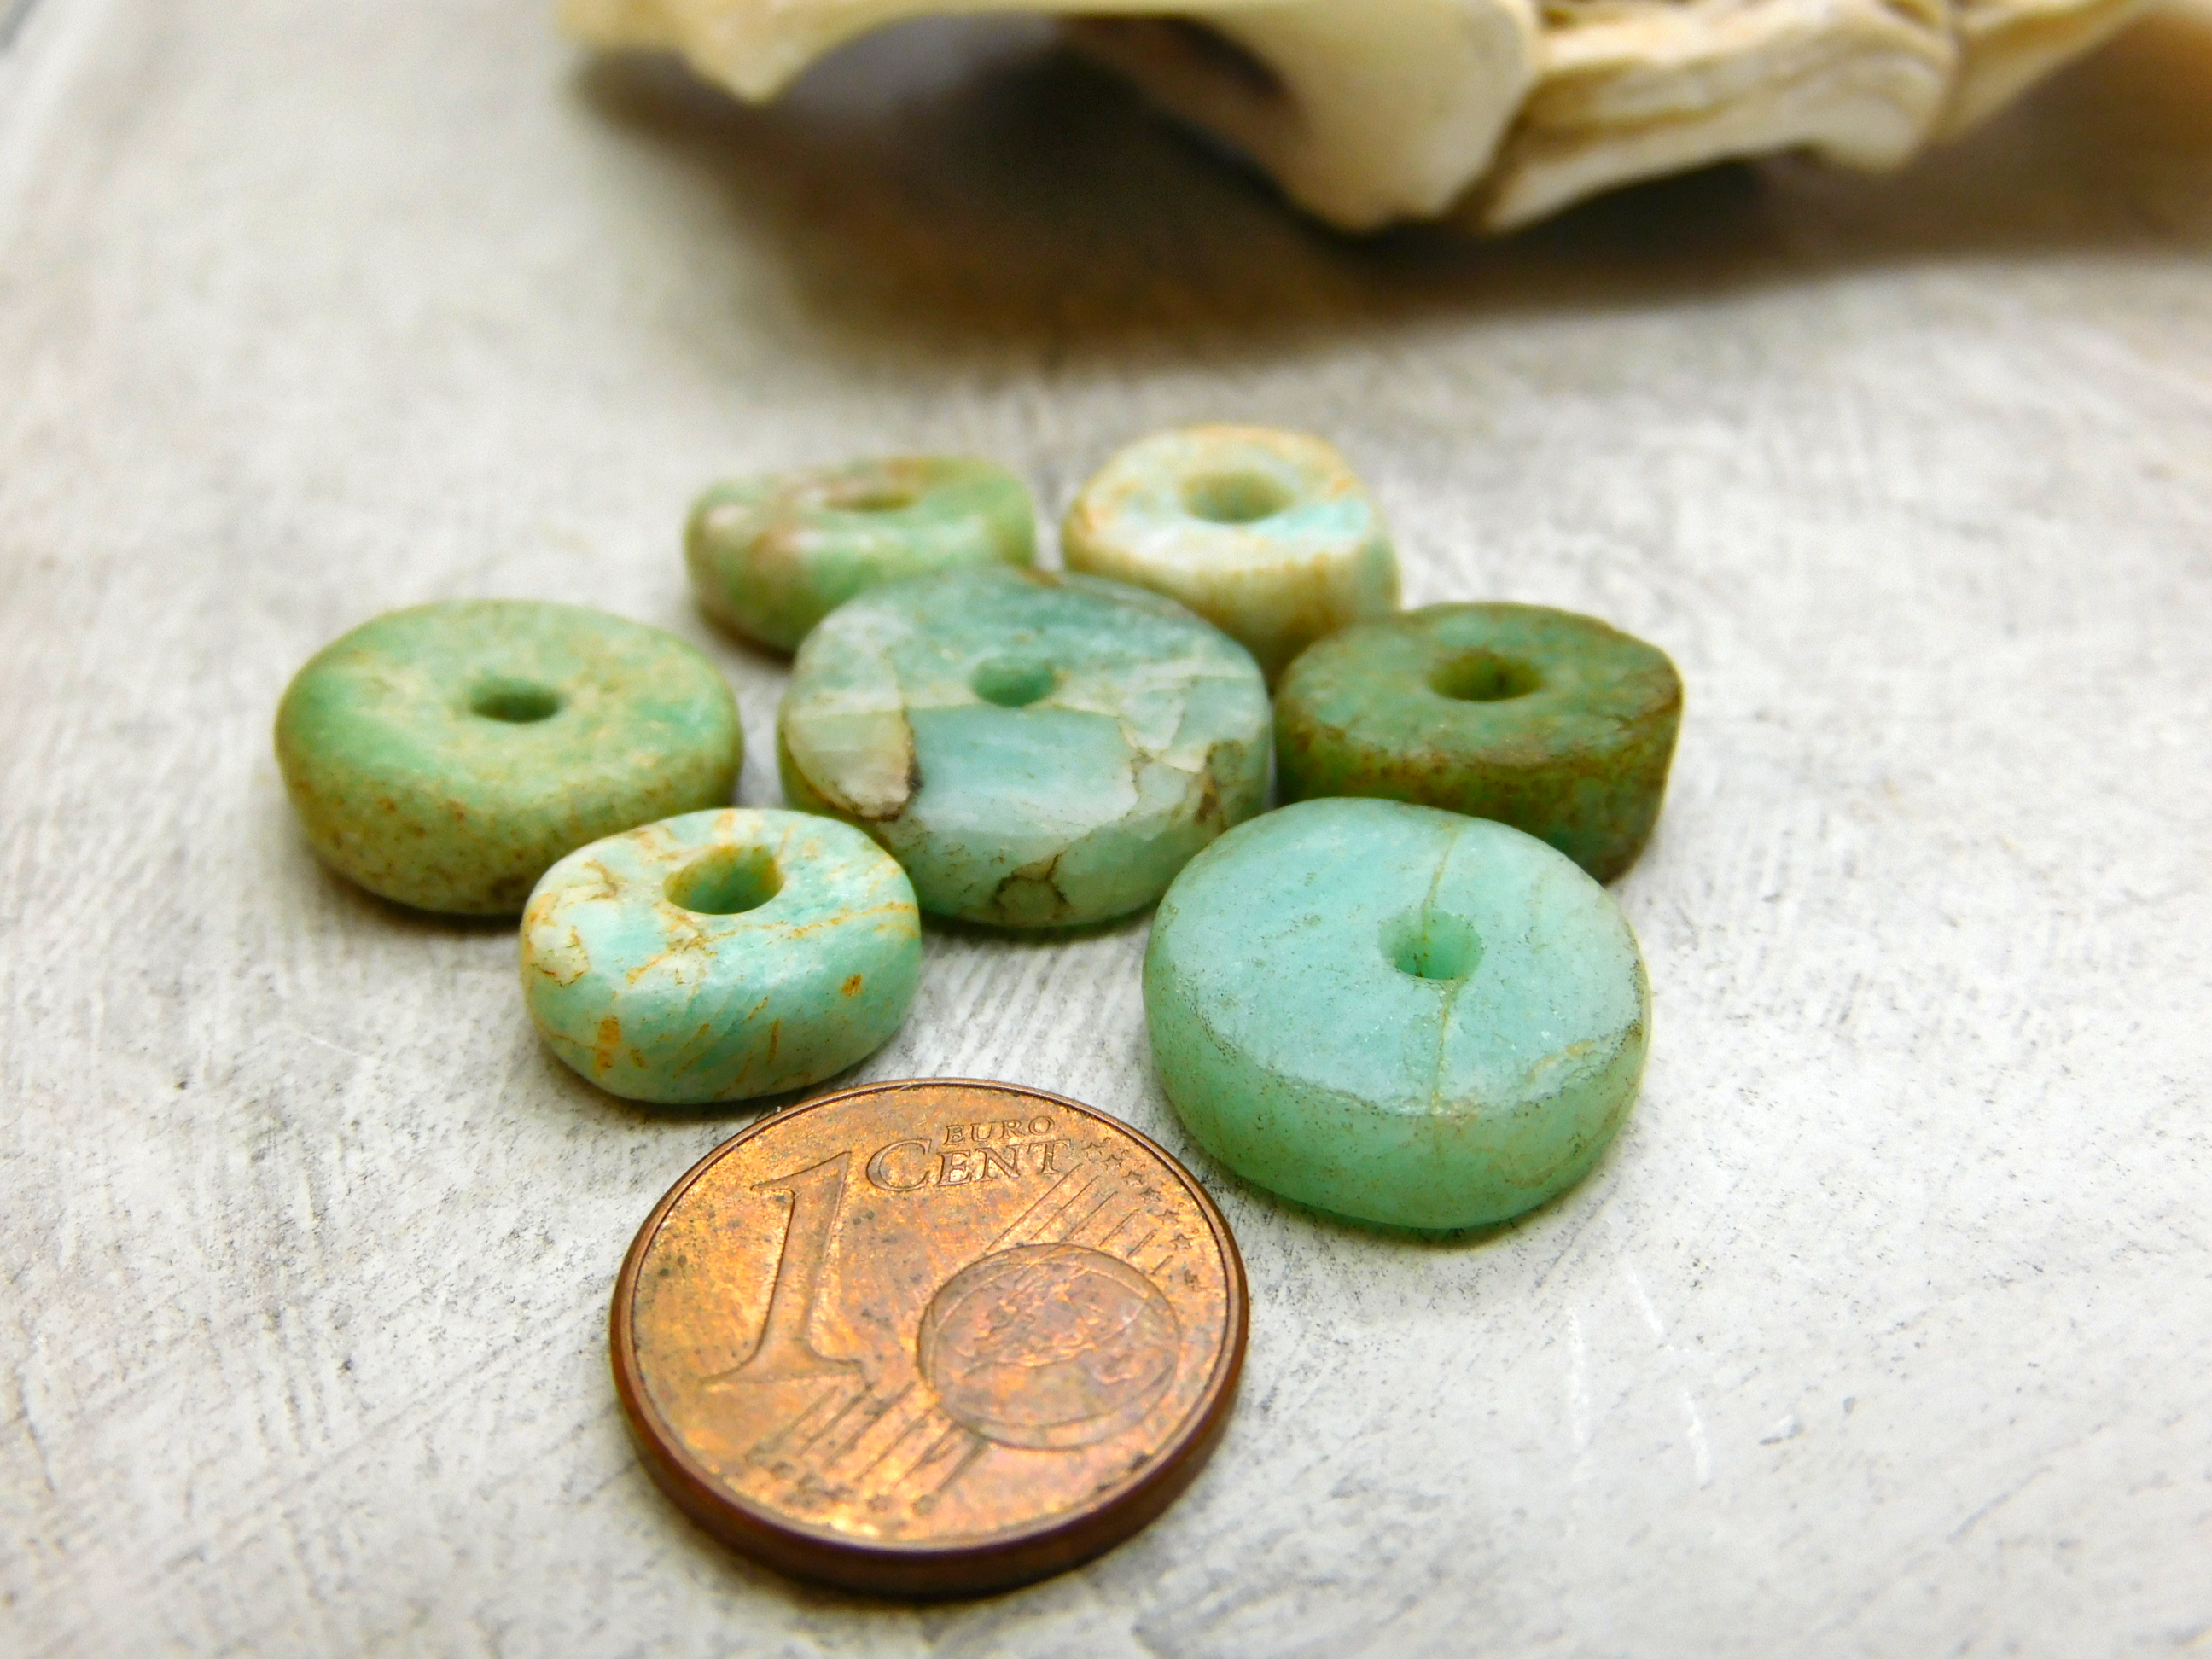 7 ancient Amazonite disc beads from Mauritania - rare Sahara stone